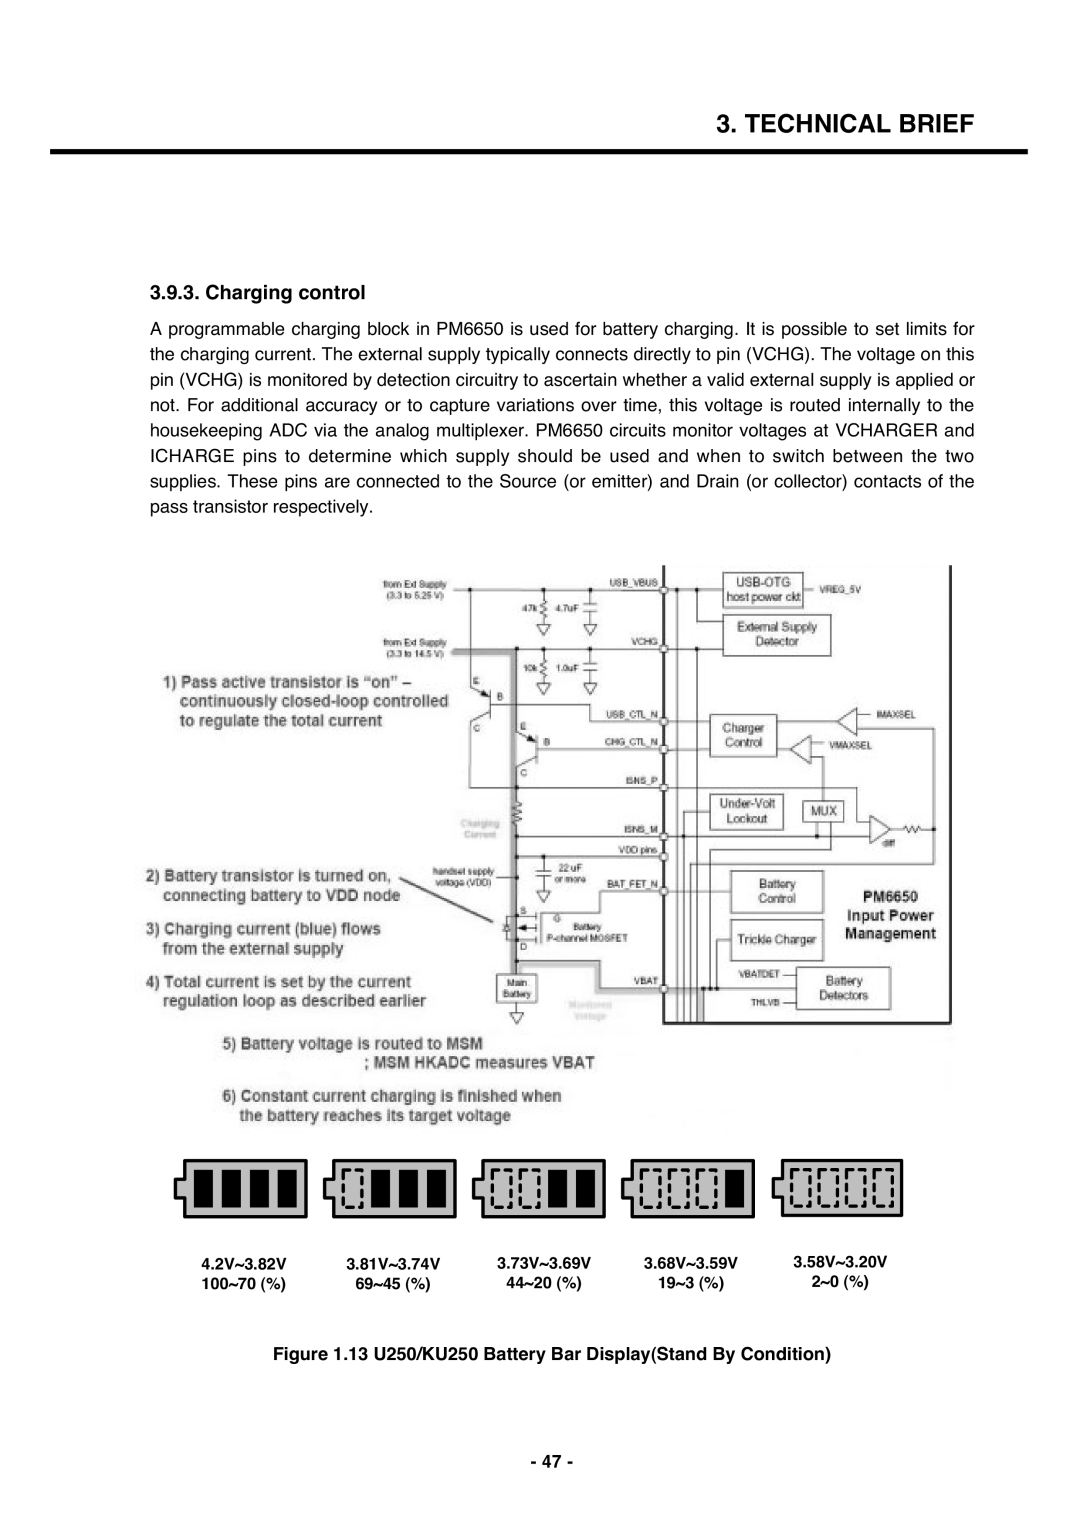 LG Electronics service manual Charging control, 13 U250/KU250 Battery Bar DisplayStand By Condition 